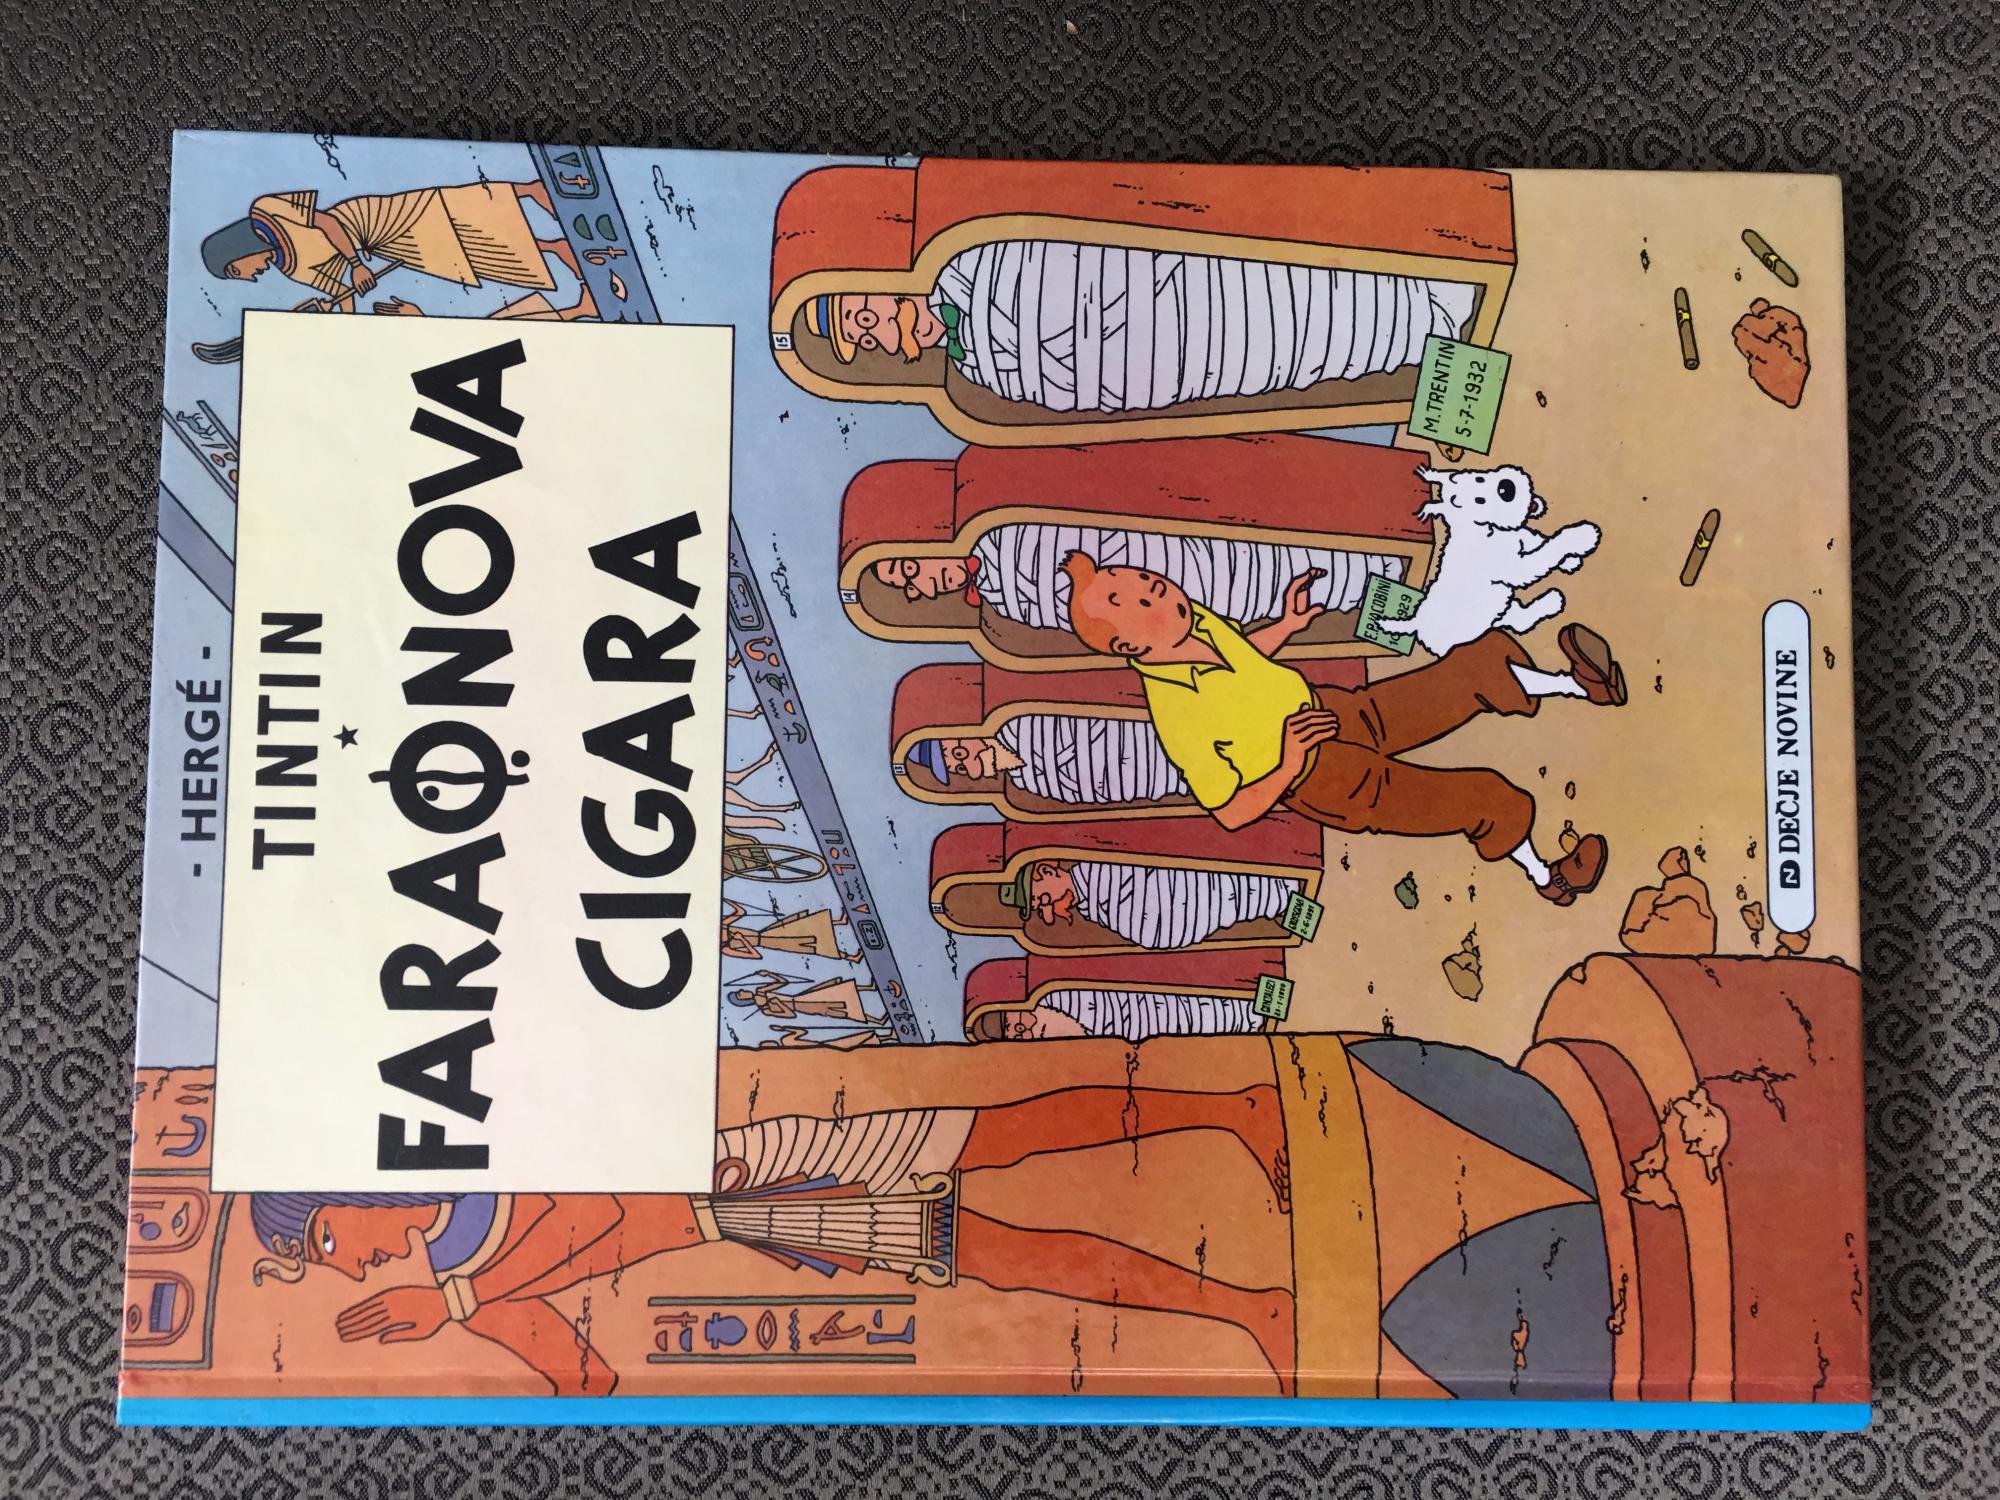 Set of 2 Tintin Books in Serbo-Croatian ( Yugoslavia ) Serbia:Faraonova  Cigara (Cigars of the Pharaoh) and Let 714 Za Sidnej (Flight 714 to Sydney)  Tintin Foreign Languages (Langues Étrangères) by Herge: